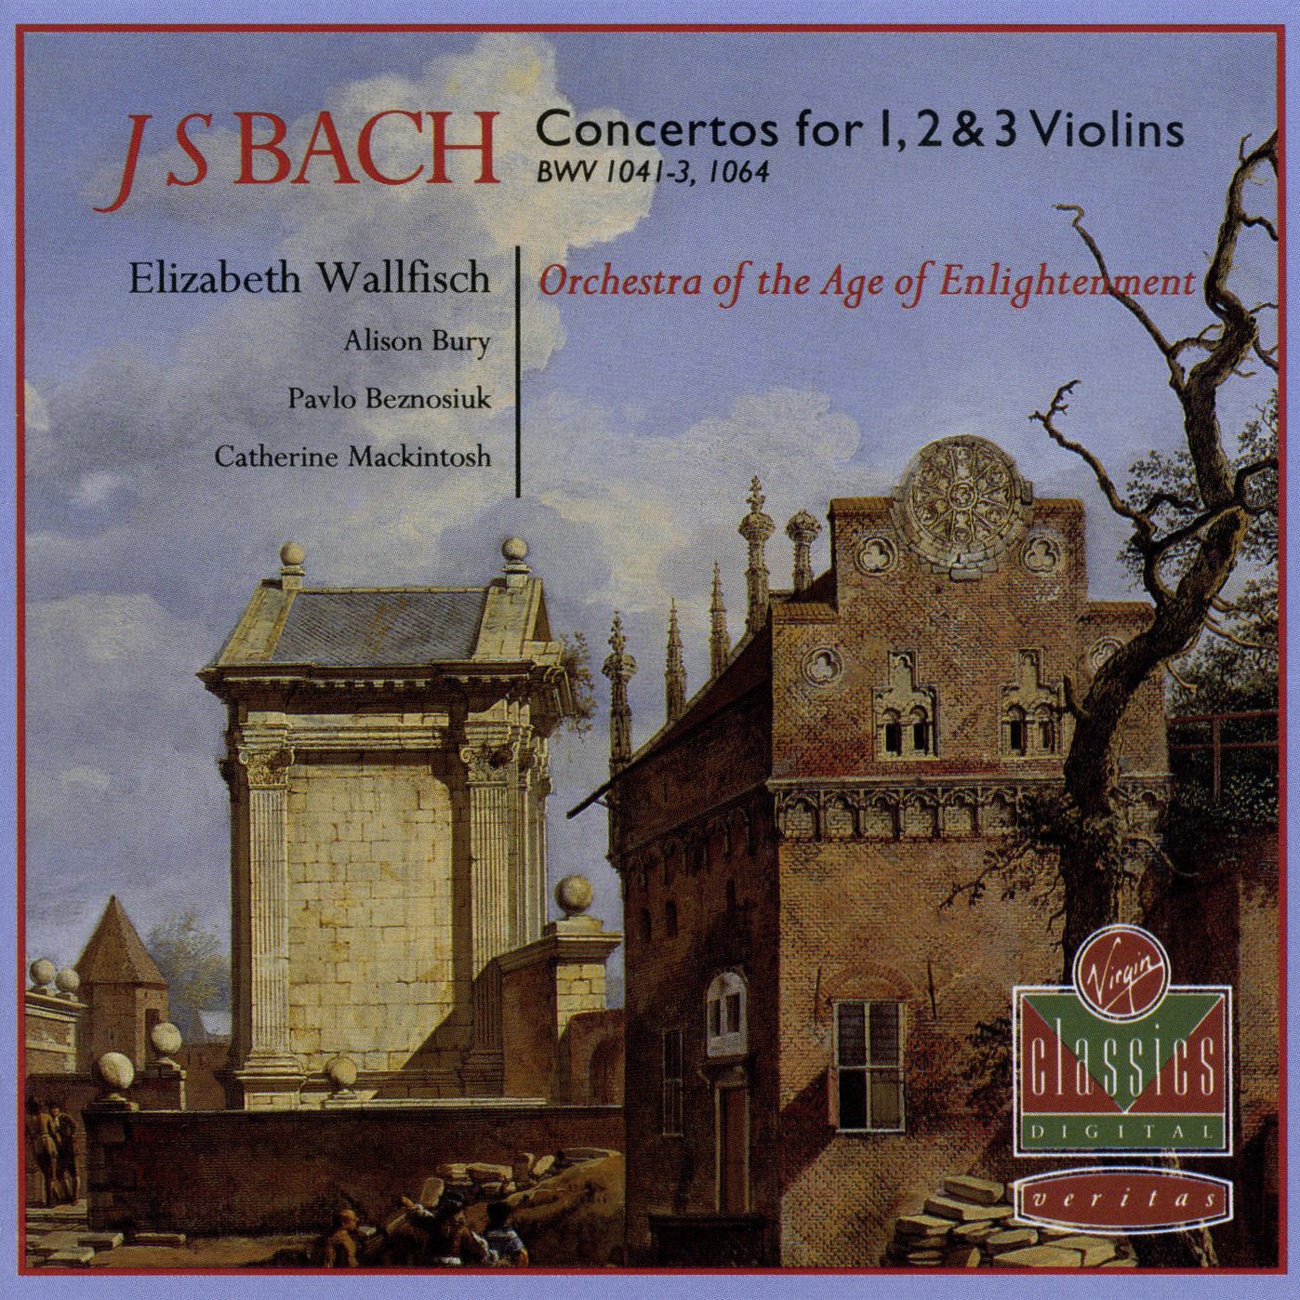 Double Violin Concerto in D minor BWV1043: I.       Vivace